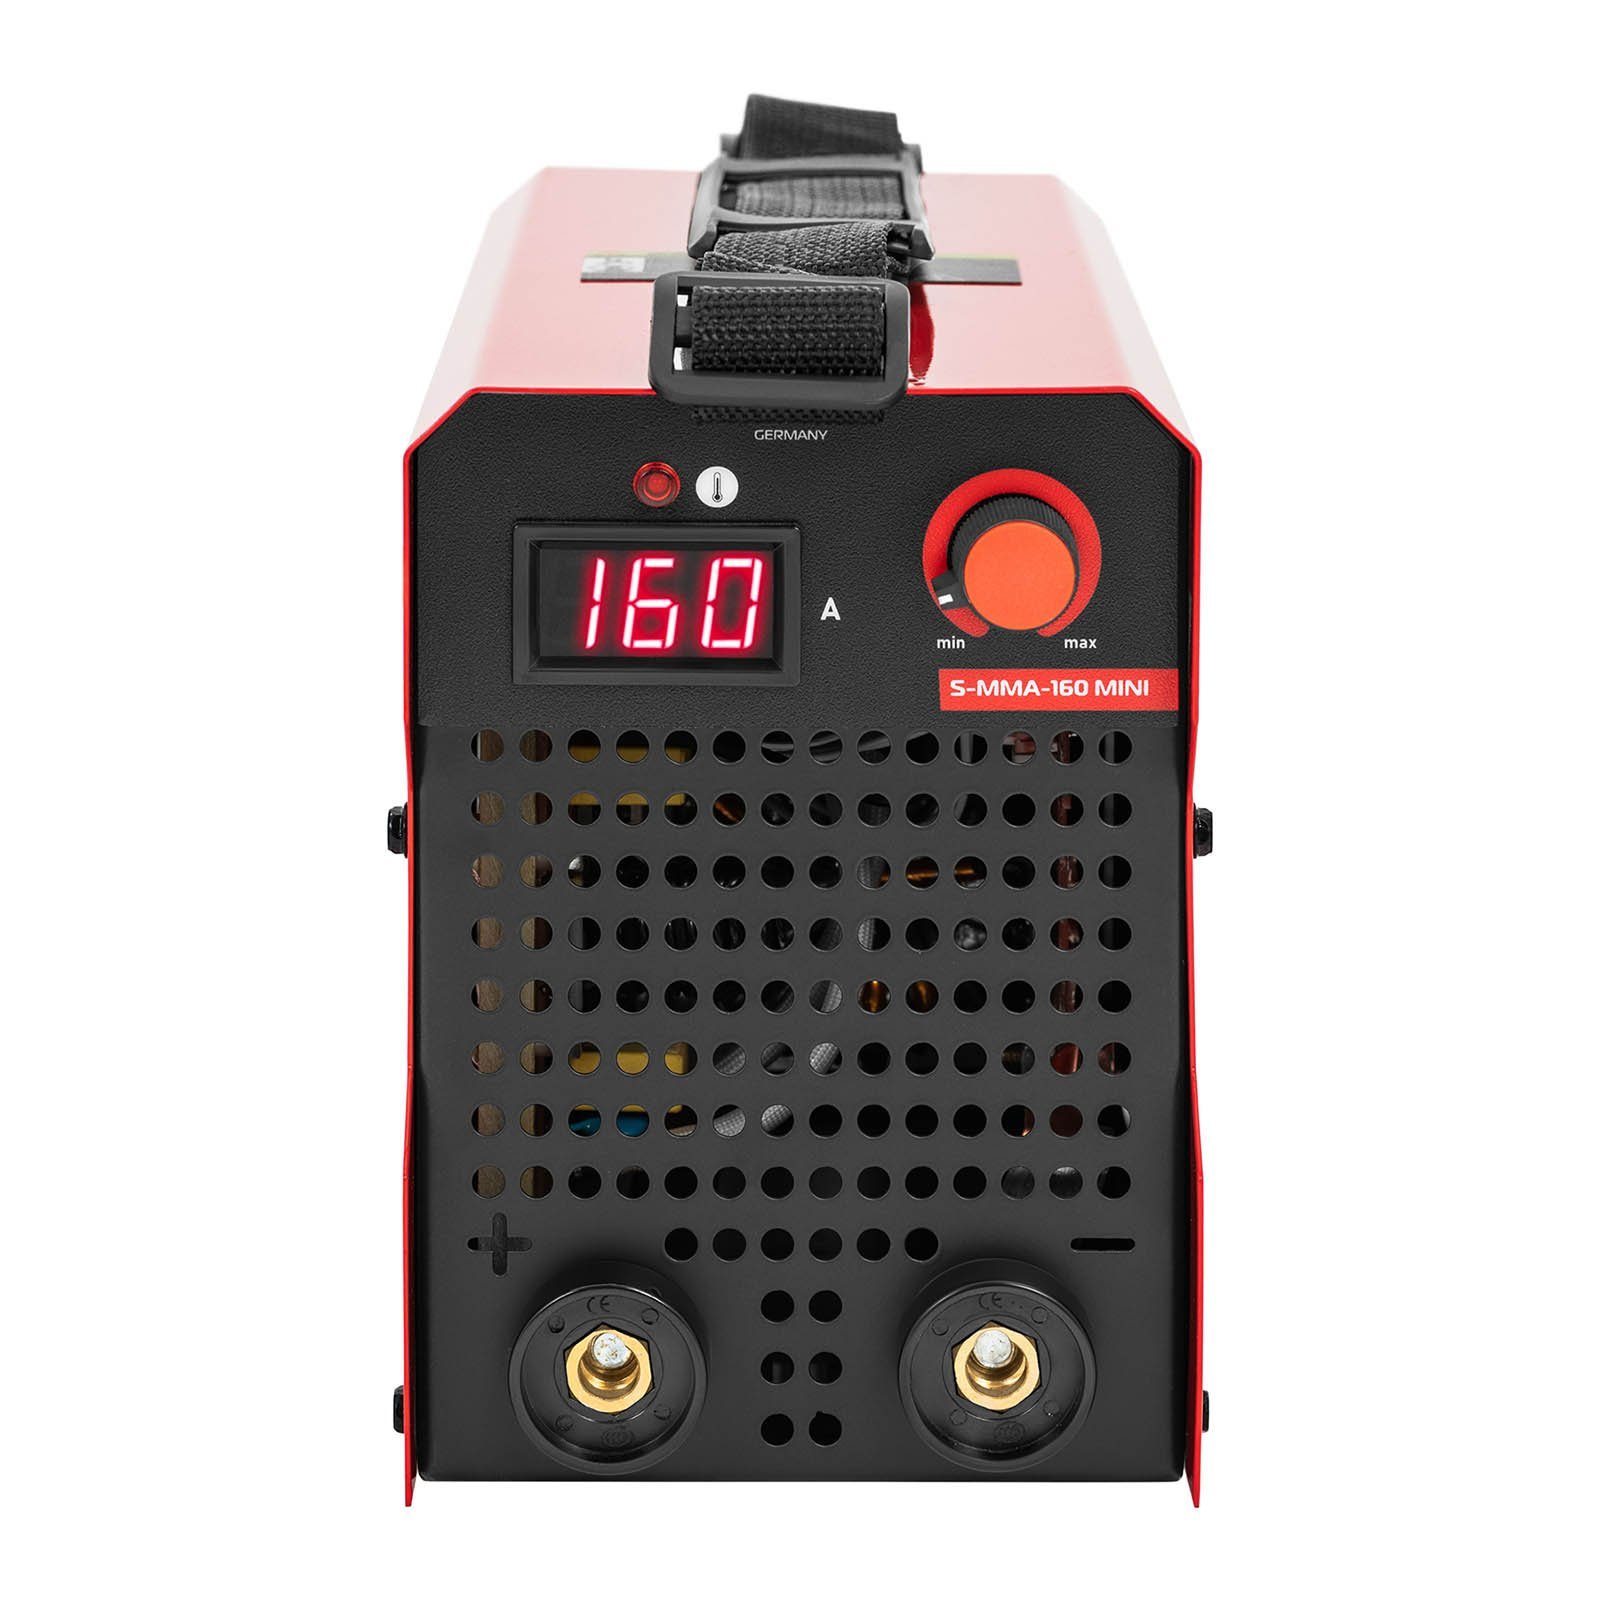 IGBT - Elektroschweißgerät Welding Cycle - Hot - 160 Elektroden-Schweißgerät Start % Stamos A - 100 Duty Group